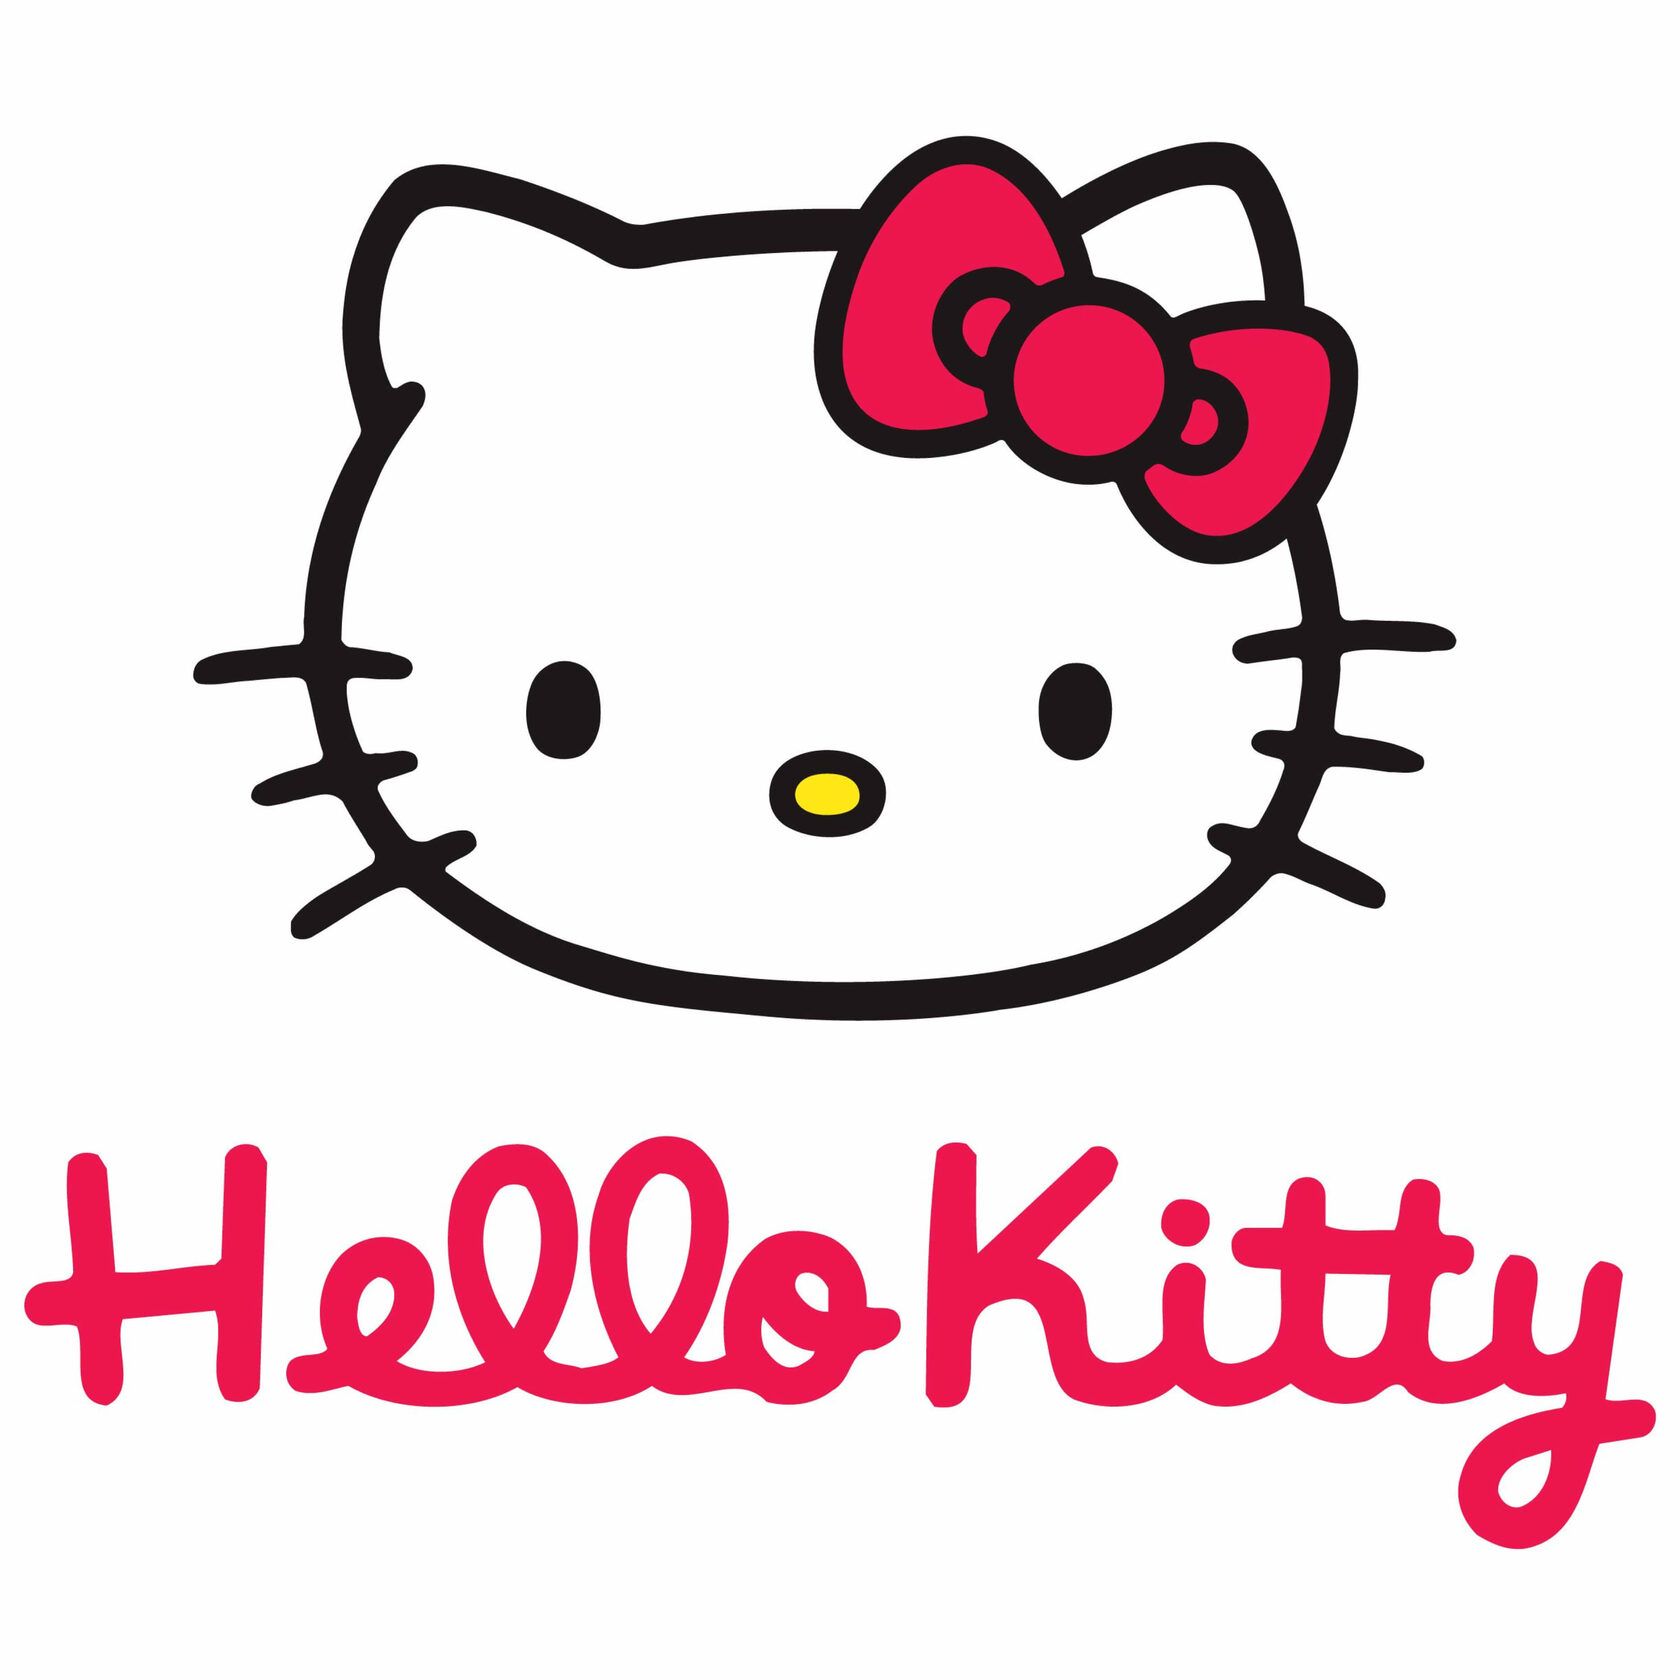 Голова hello. Хелло Китти. Хеллоу Китти hello Kitty hello Kitty. Хэллоу Китти эмблема. Hello Kitty бренд.